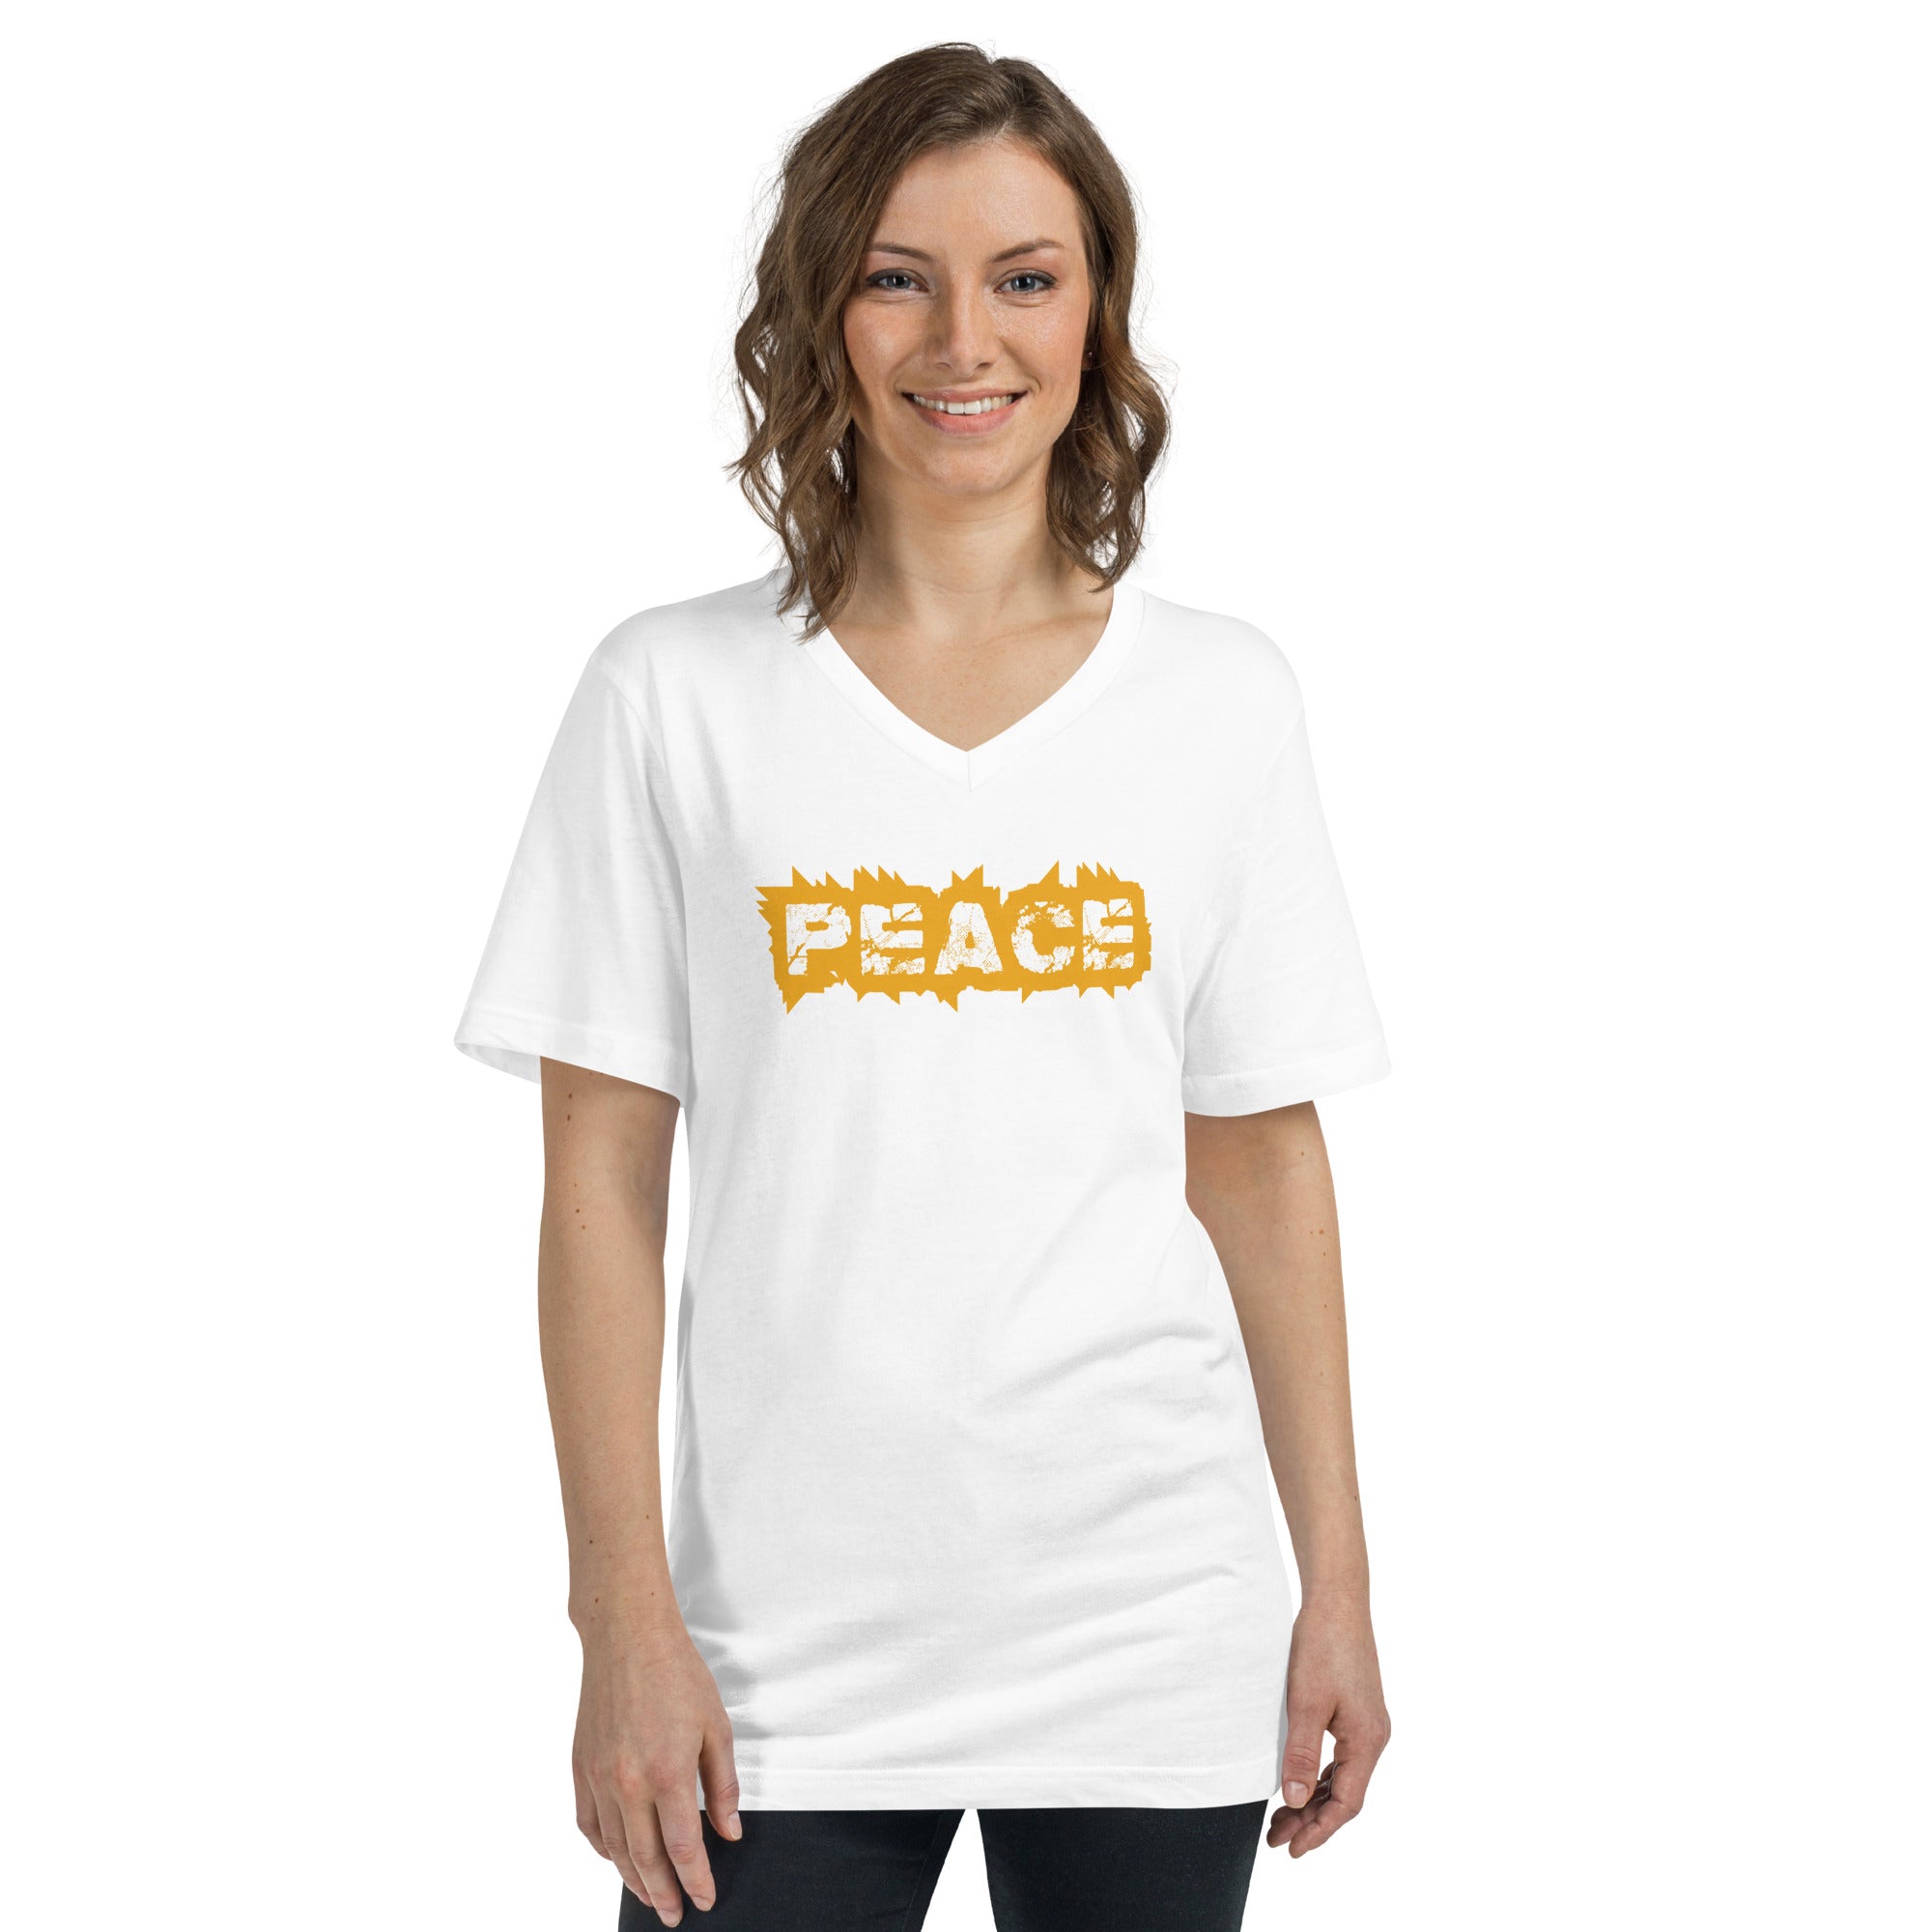 Peace V-Neck T-Shirt